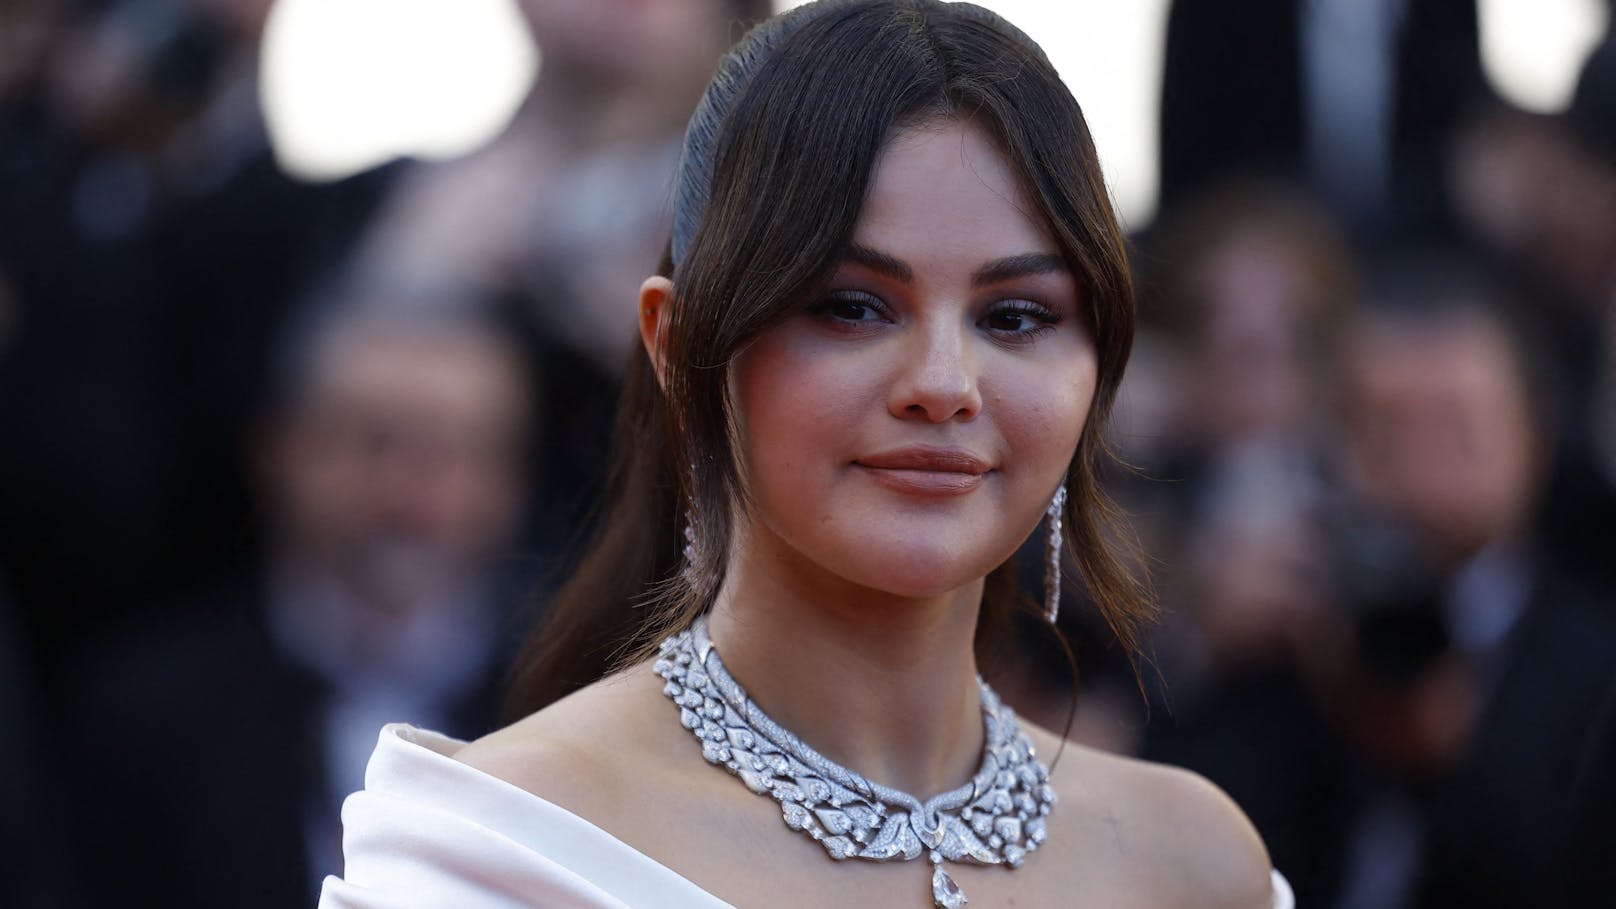 "Längster Applaus": Selena Gomez begeistert in Cannes